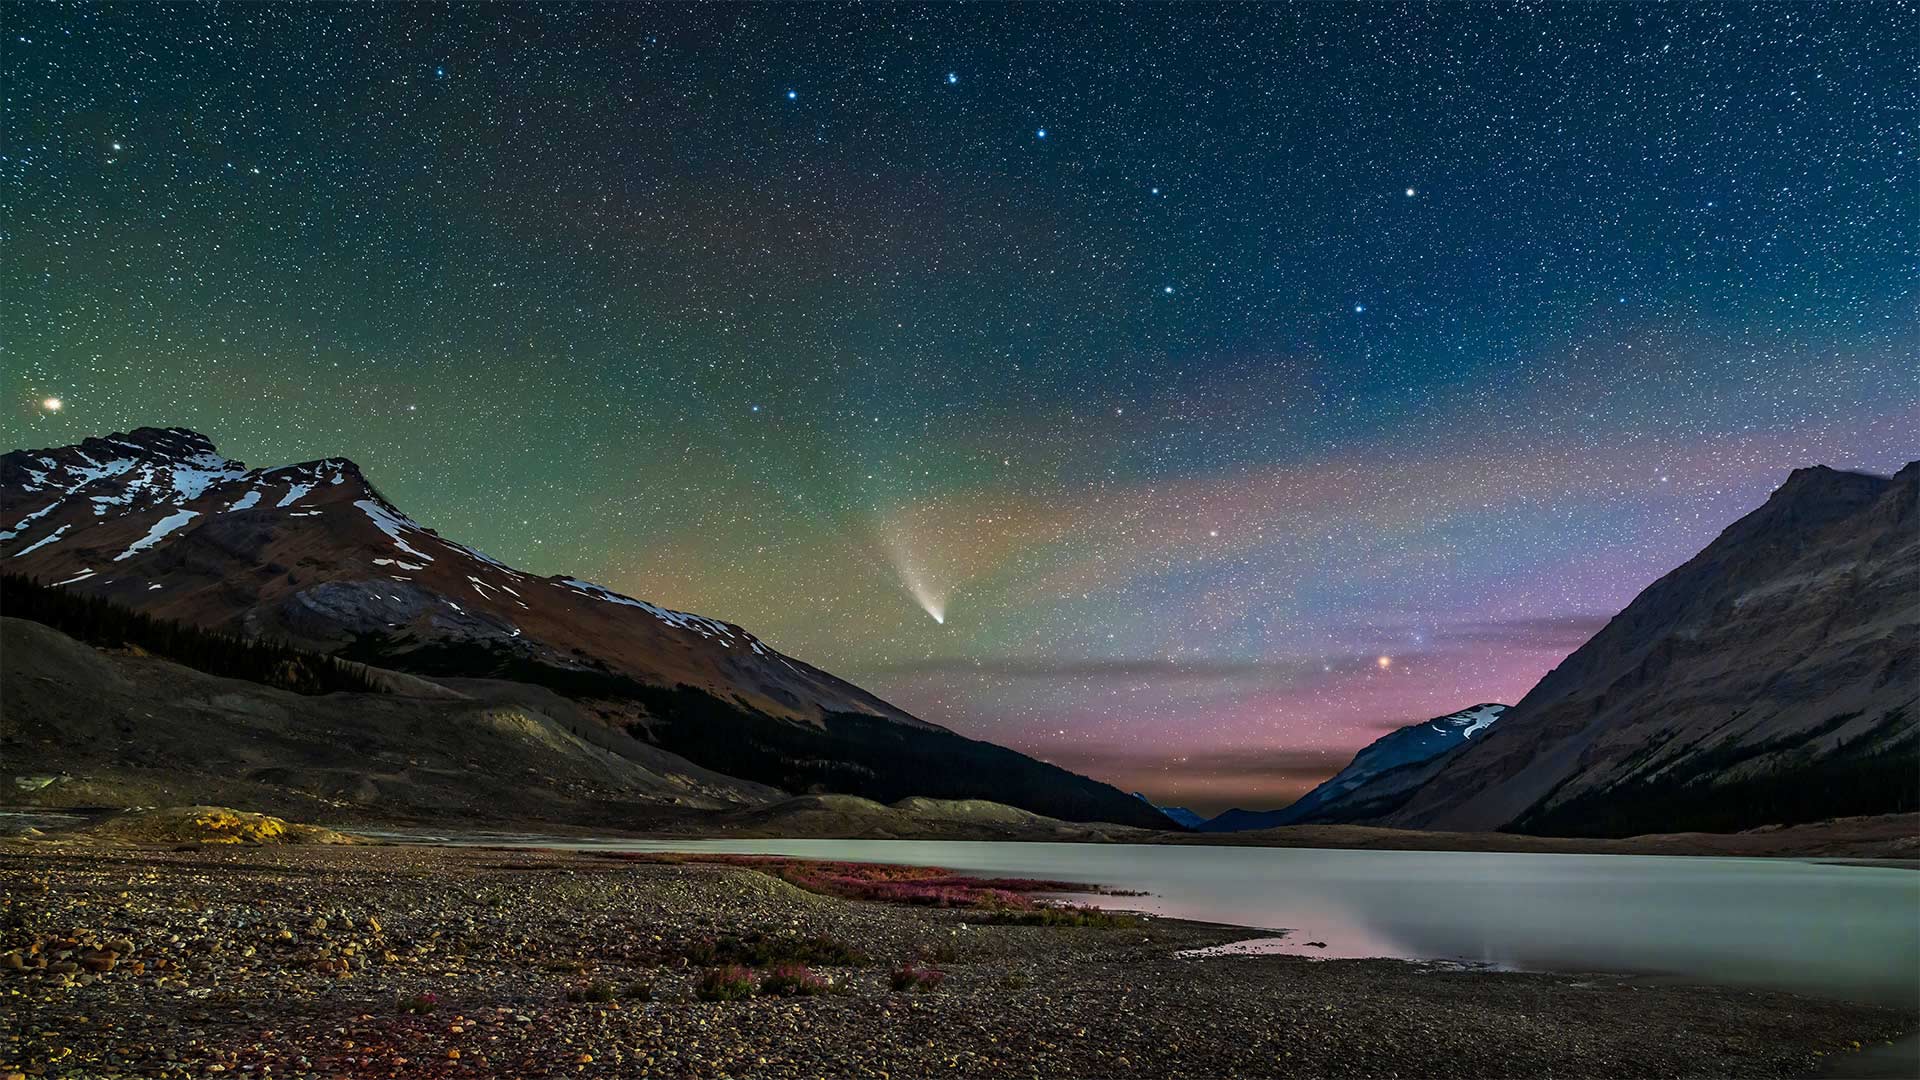 Comet NEOWISE streaks across the sky over Sunwapta Lake in Jasper National Park, Alberta, Canada - Stocktrek Images, Inc./Alamy)